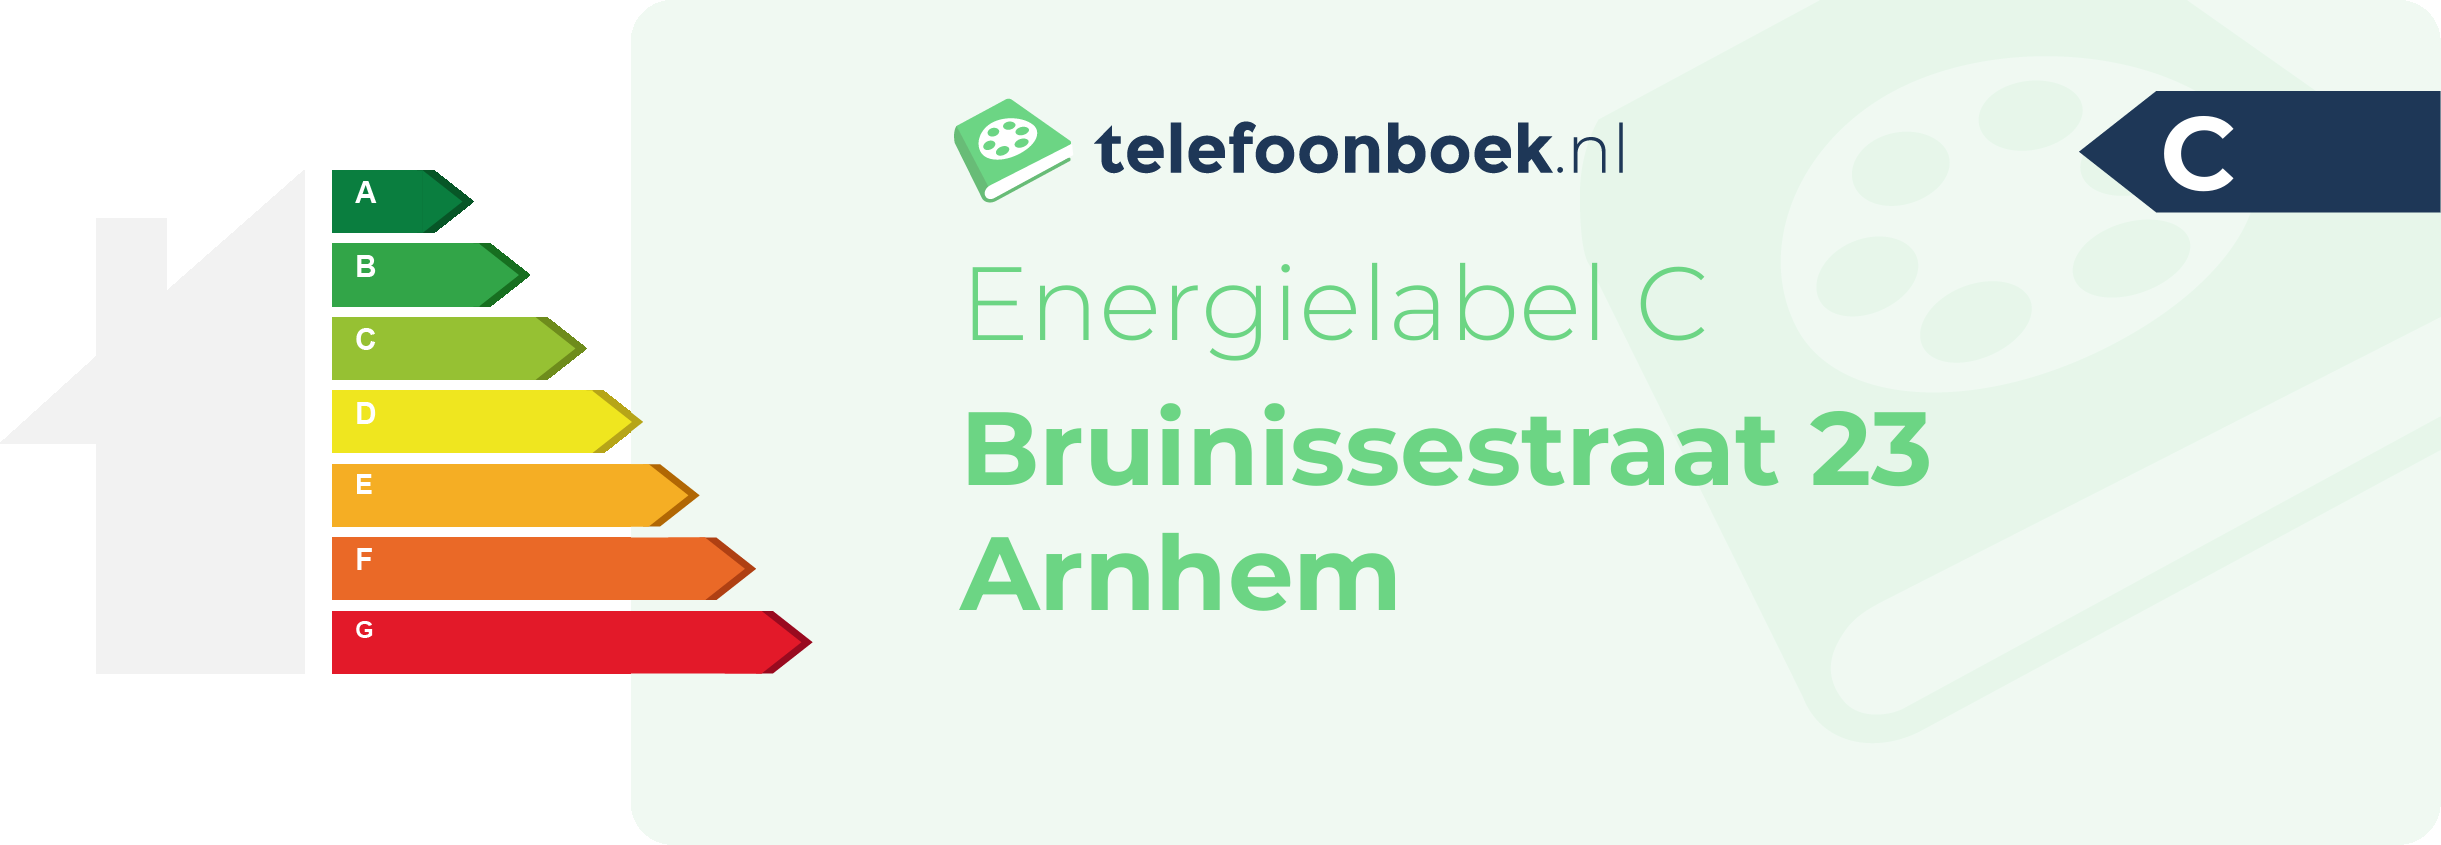 Energielabel Bruinissestraat 23 Arnhem